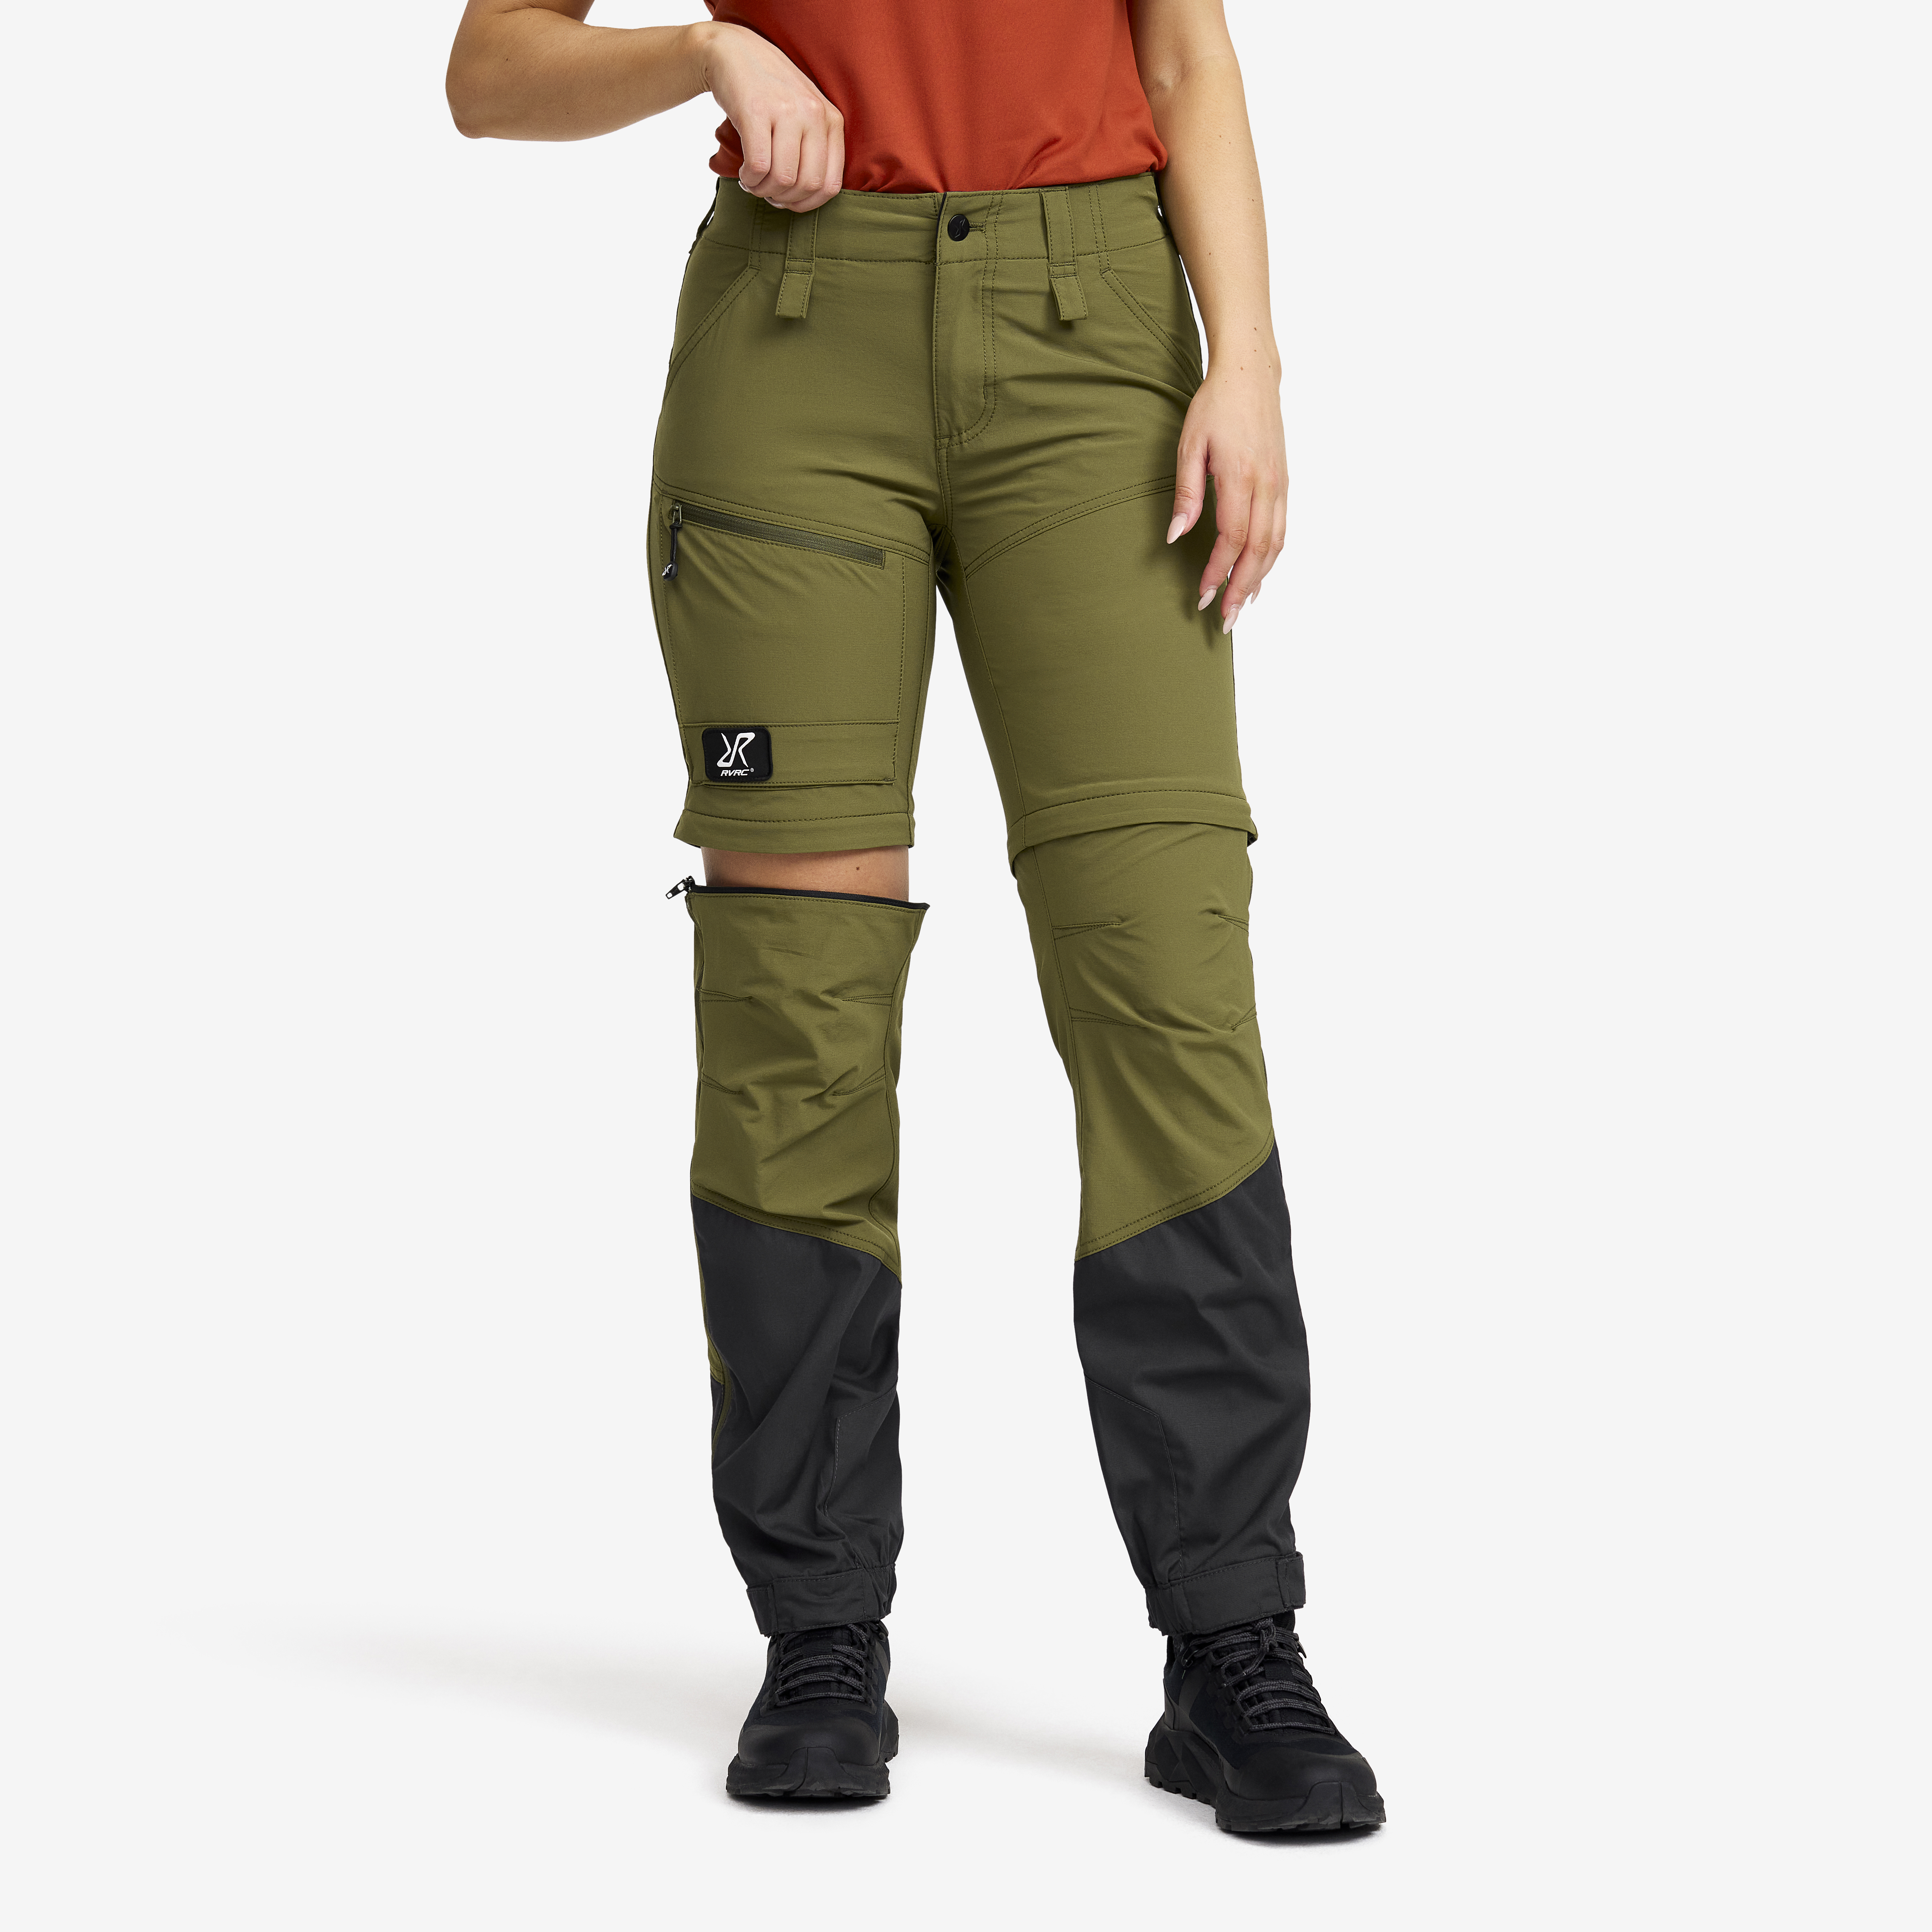 Range Pro Zip-off Pants  Burnt Olive/Anthracite Women